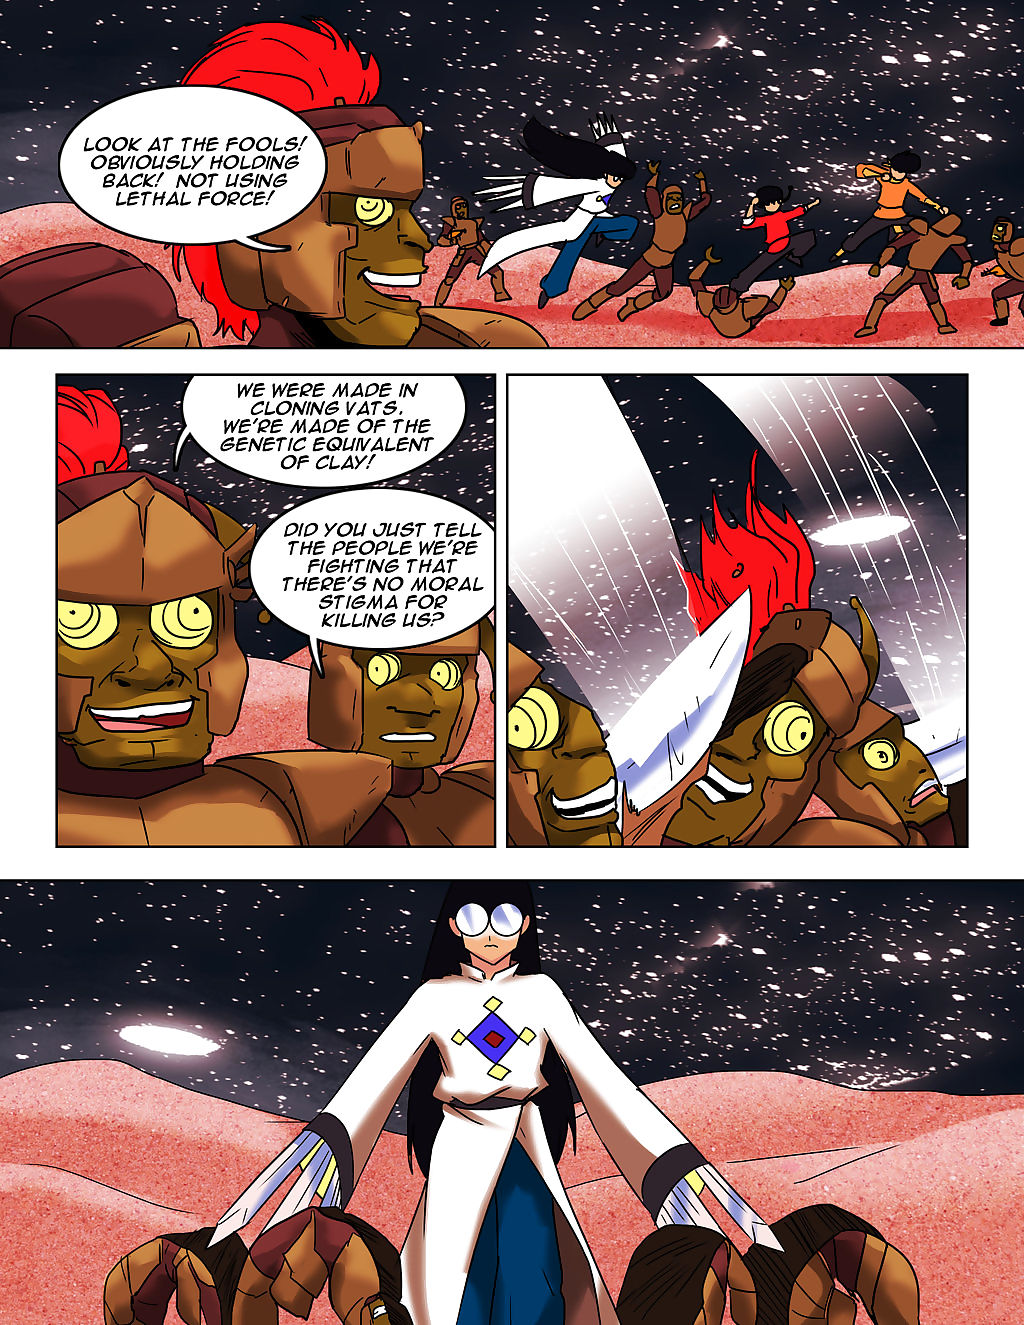 Ranma of Mars - part 2